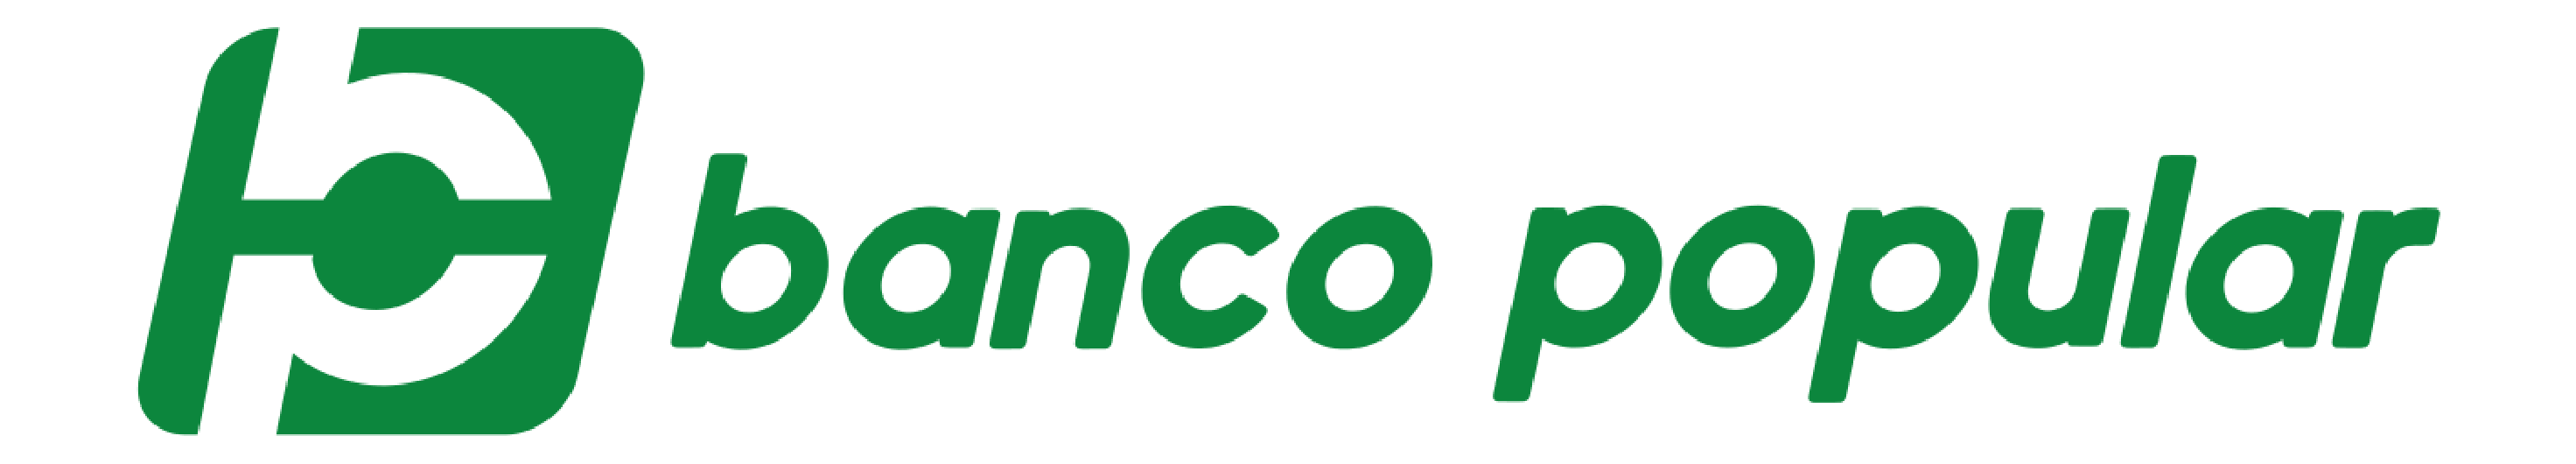 BANCO POPULAR-01